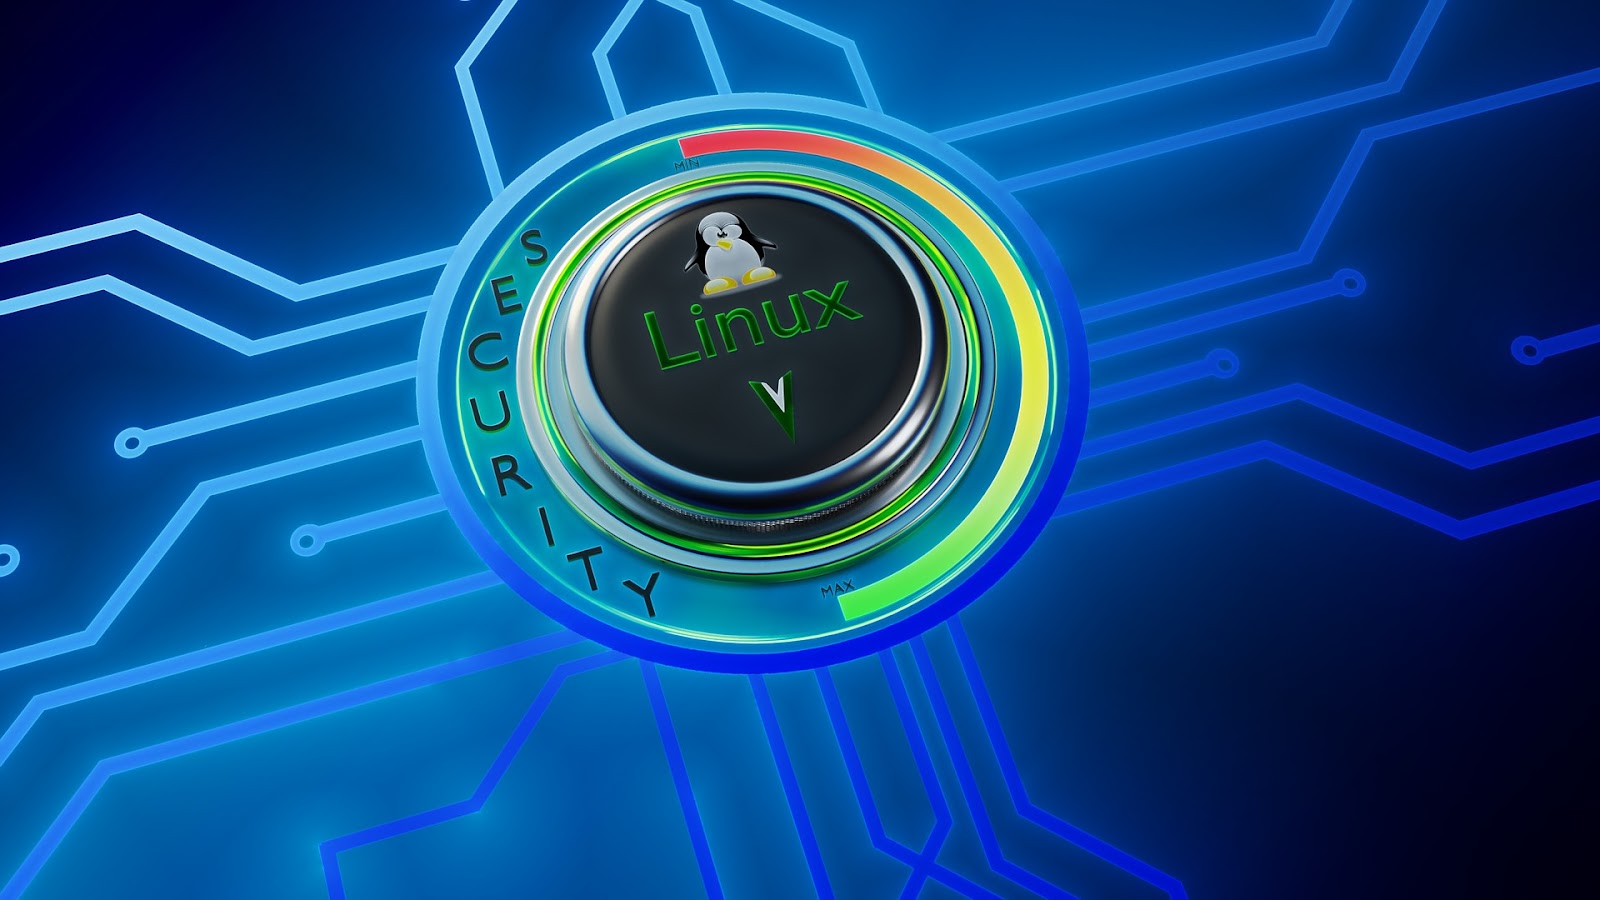 LinuxでVPNを導入する4つの方法とおすすめの有料VPNを解説！